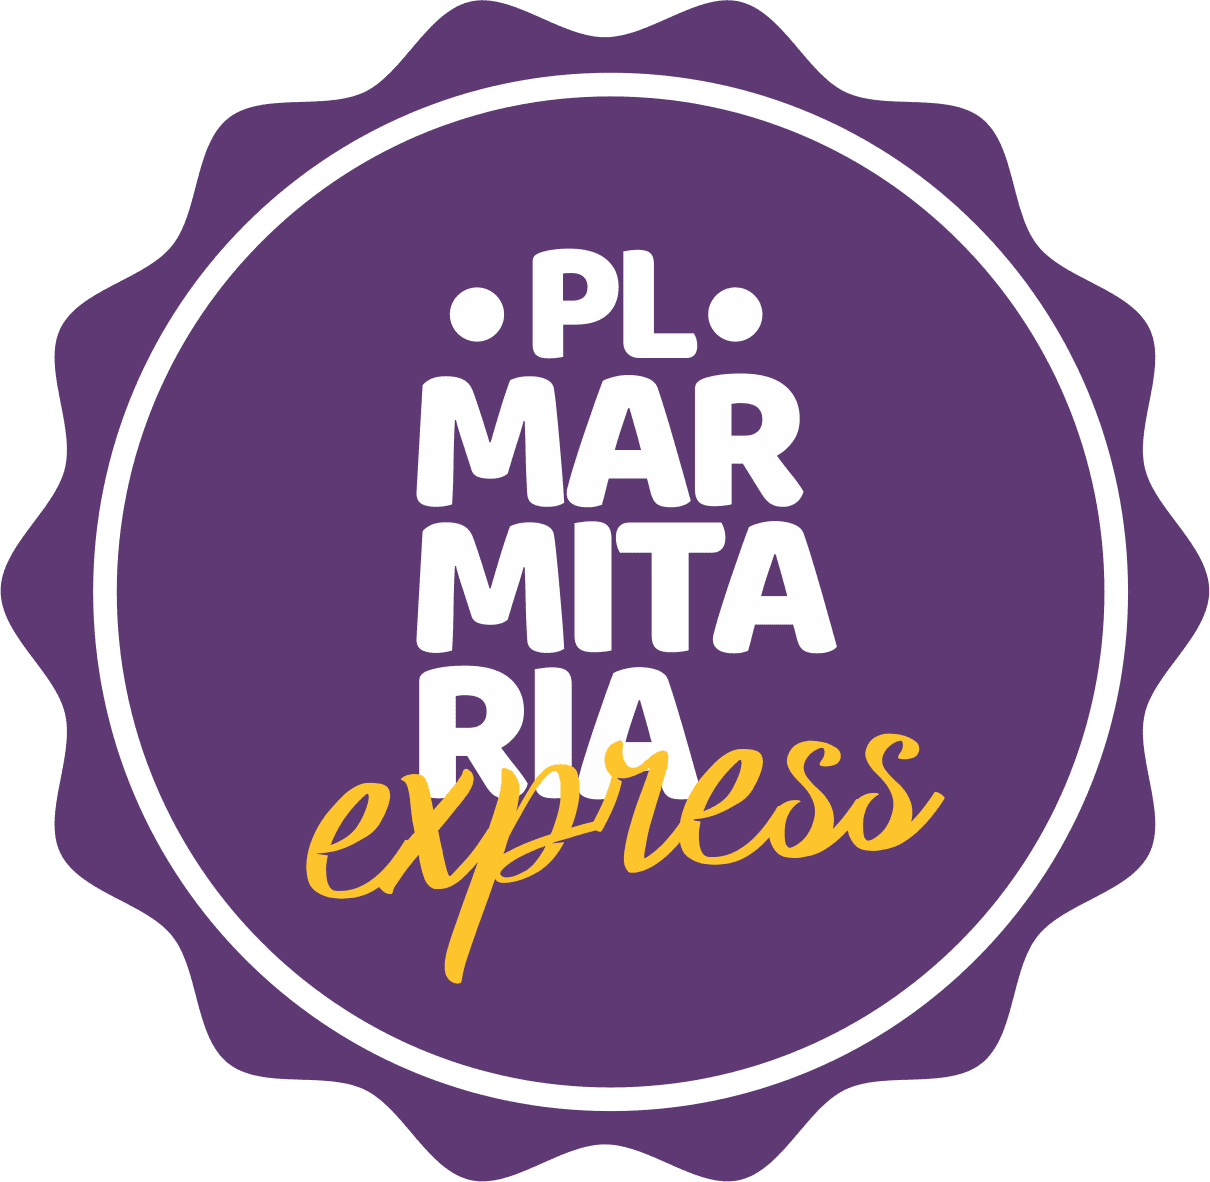 PL Marmitaria Express